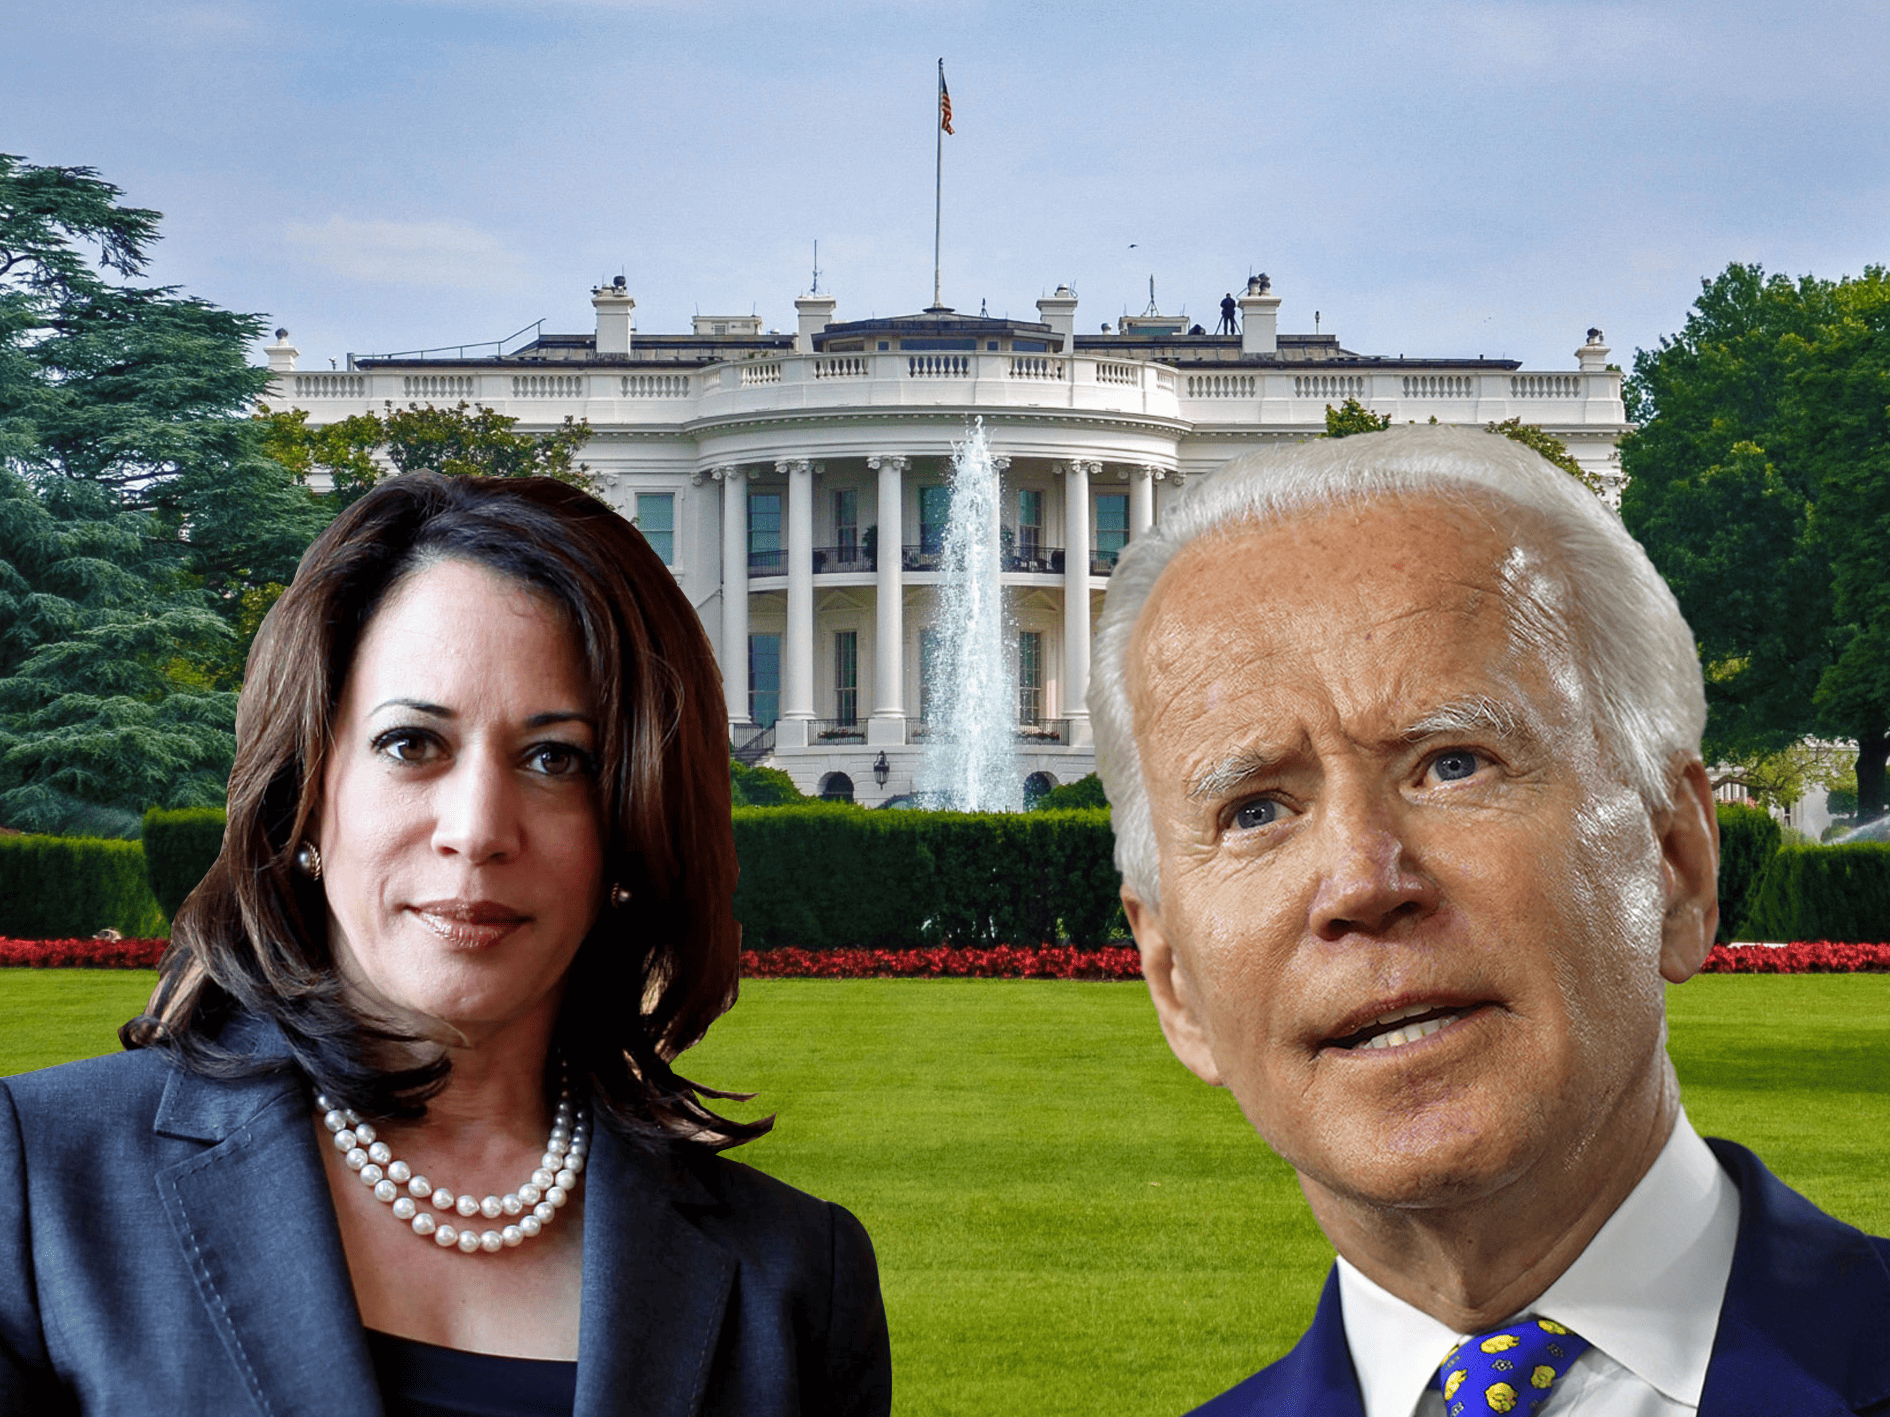 Joe Biden: Nine Months In